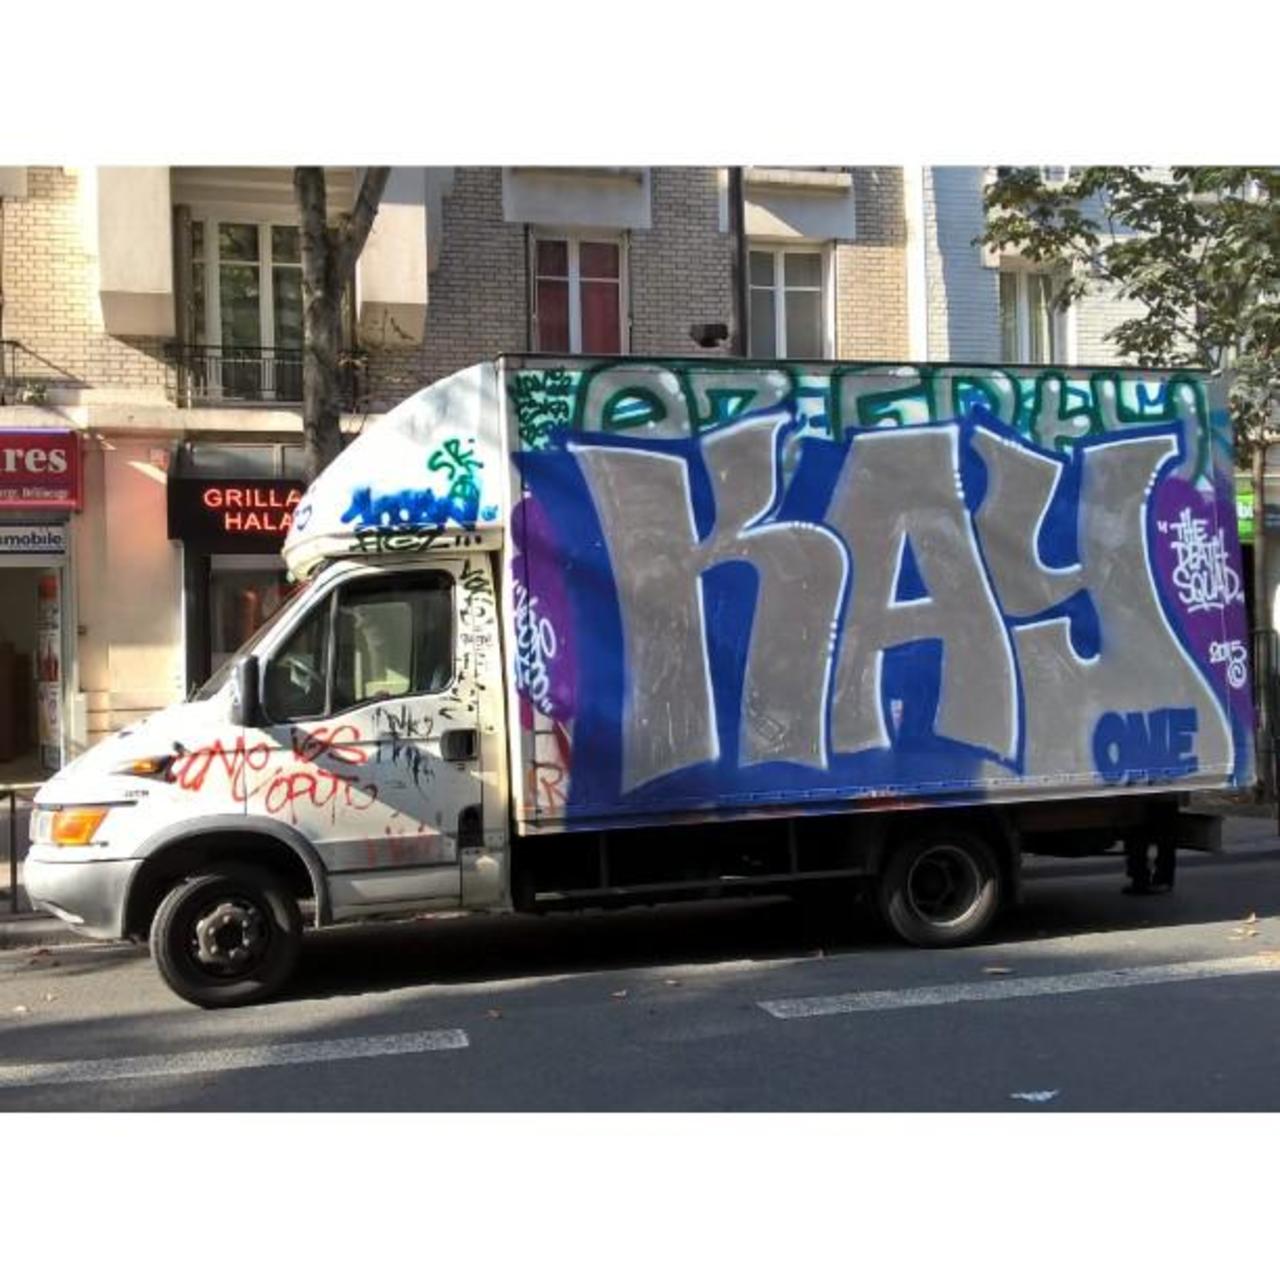 #Paris #graffiti photo by @maxdimontemarciano http://ift.tt/1jkuMS7 #StreetArt http://t.co/lLeQriRjyn